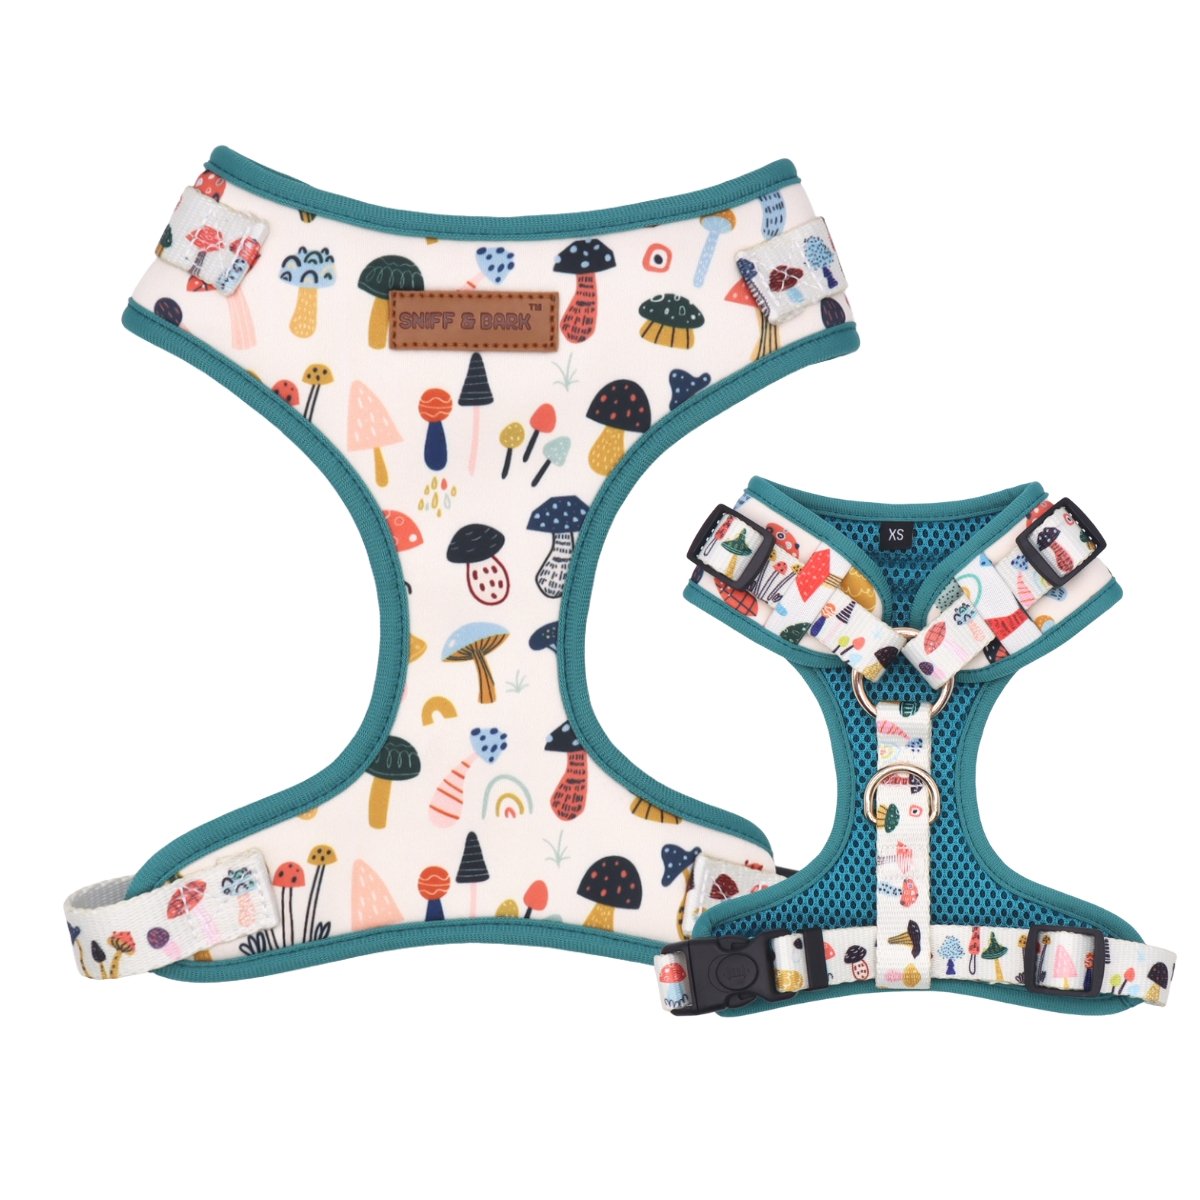 cute dog harness for boy and girls - best dog harness canada - Mushroom pattern harness